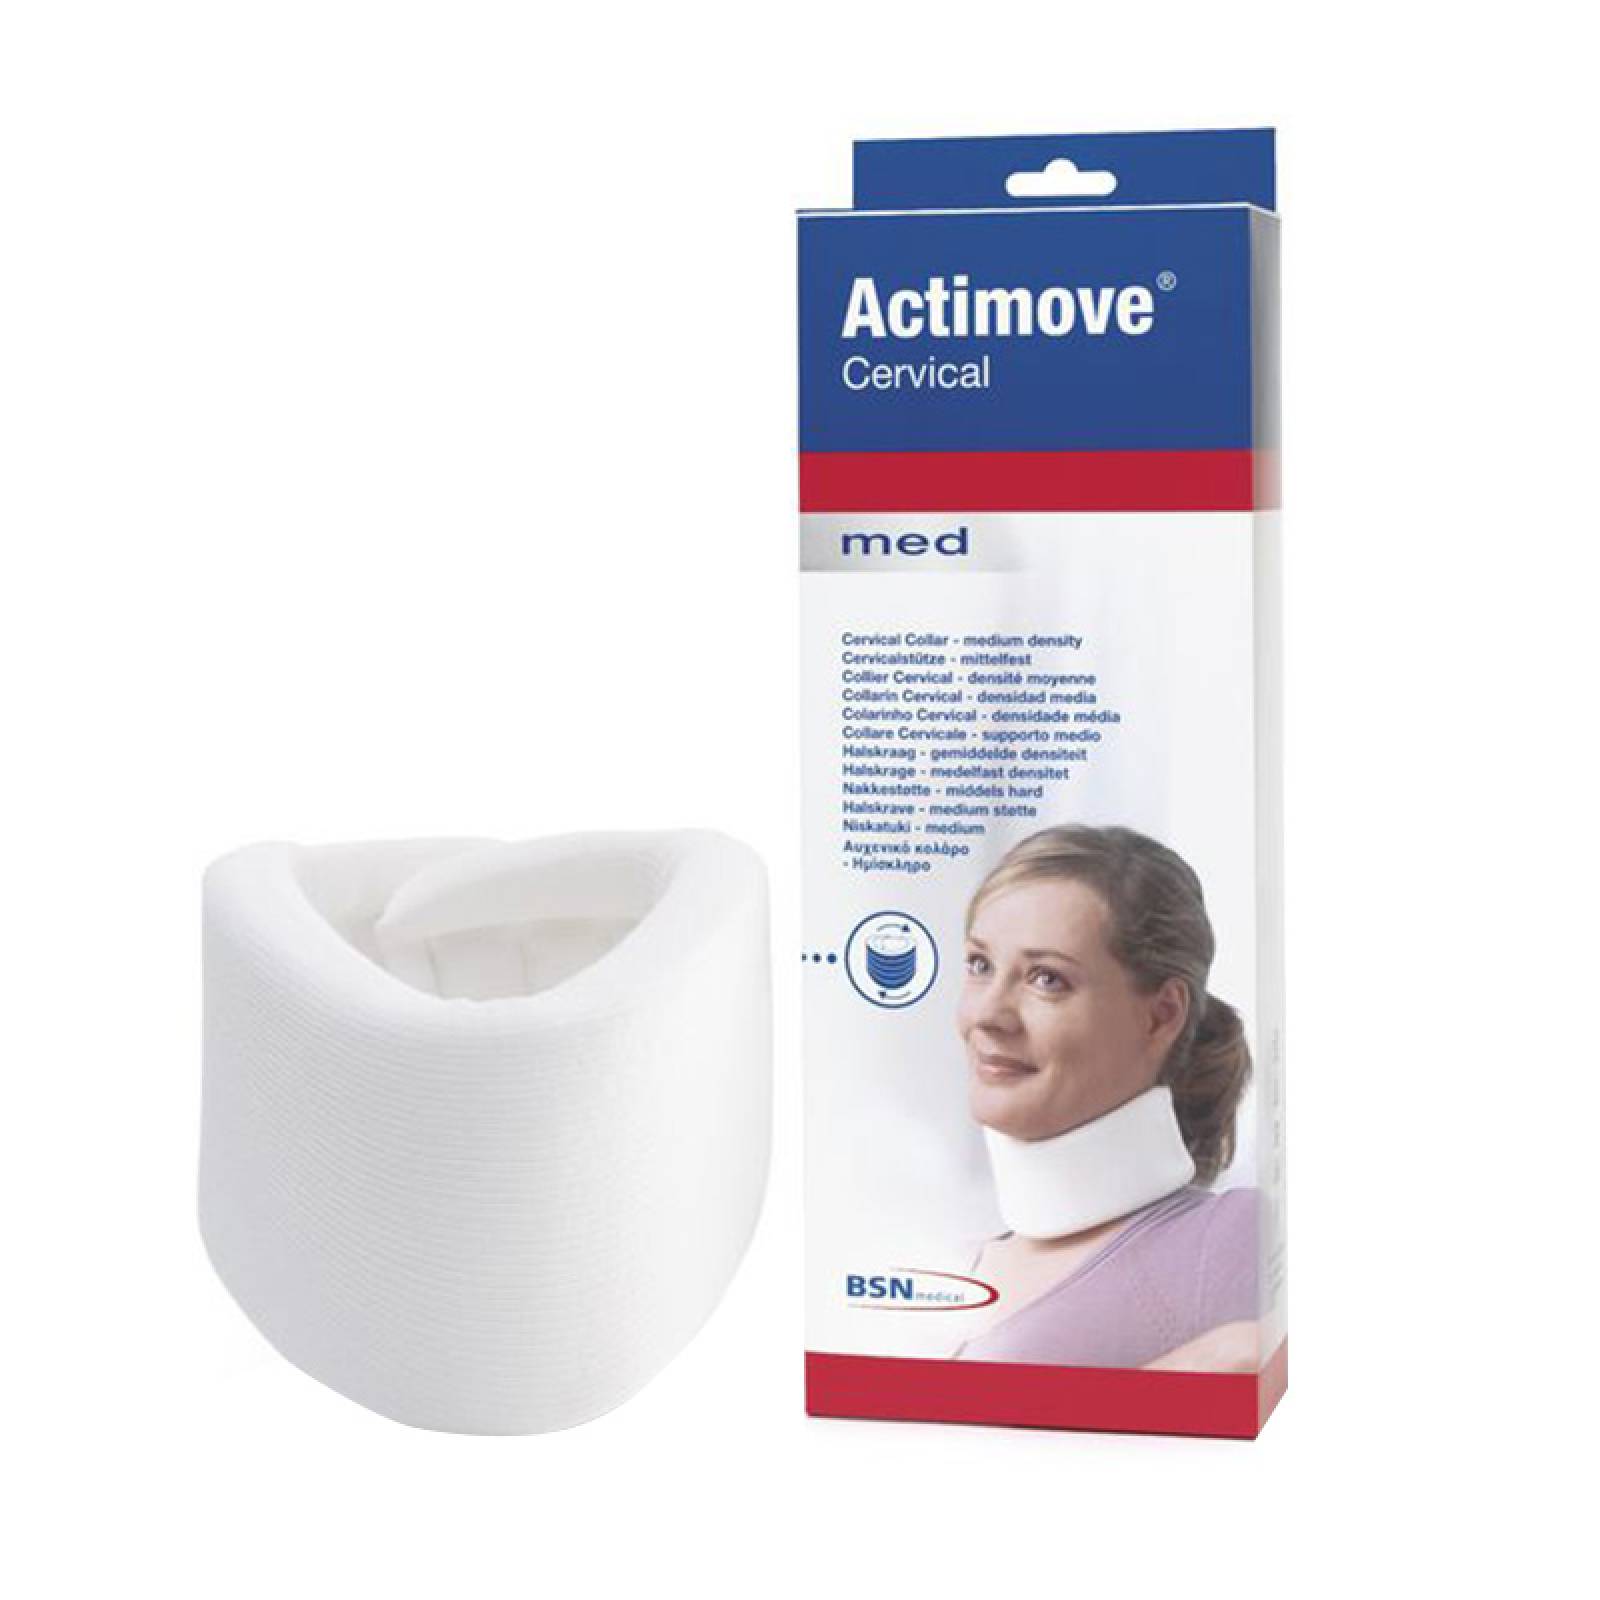 Collar Cervical soporte ligero Suave autoadhesivo ActimoveBSN